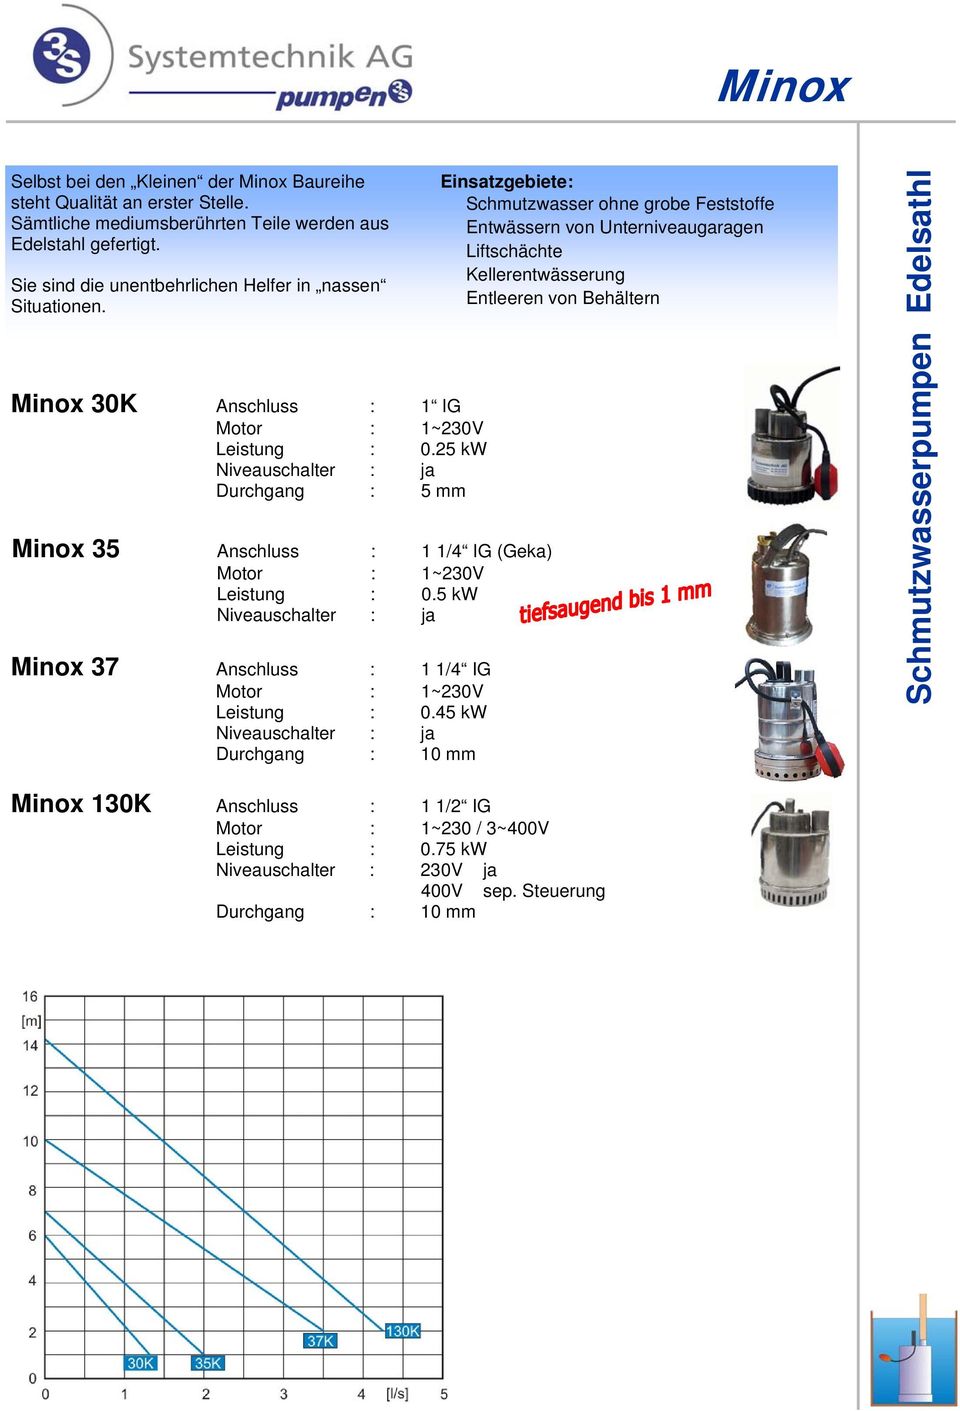 25 kw Niveauschalter : ja Durchgang : 5 mm Minox 35 Anschluss : 1 1/4 IG (Geka) Motor : 1~230V Leistung : 0.5 kw Niveauschalter : ja Minox 37 Anschluss : 1 1/4 IG Motor : 1~230V Leistung : 0.